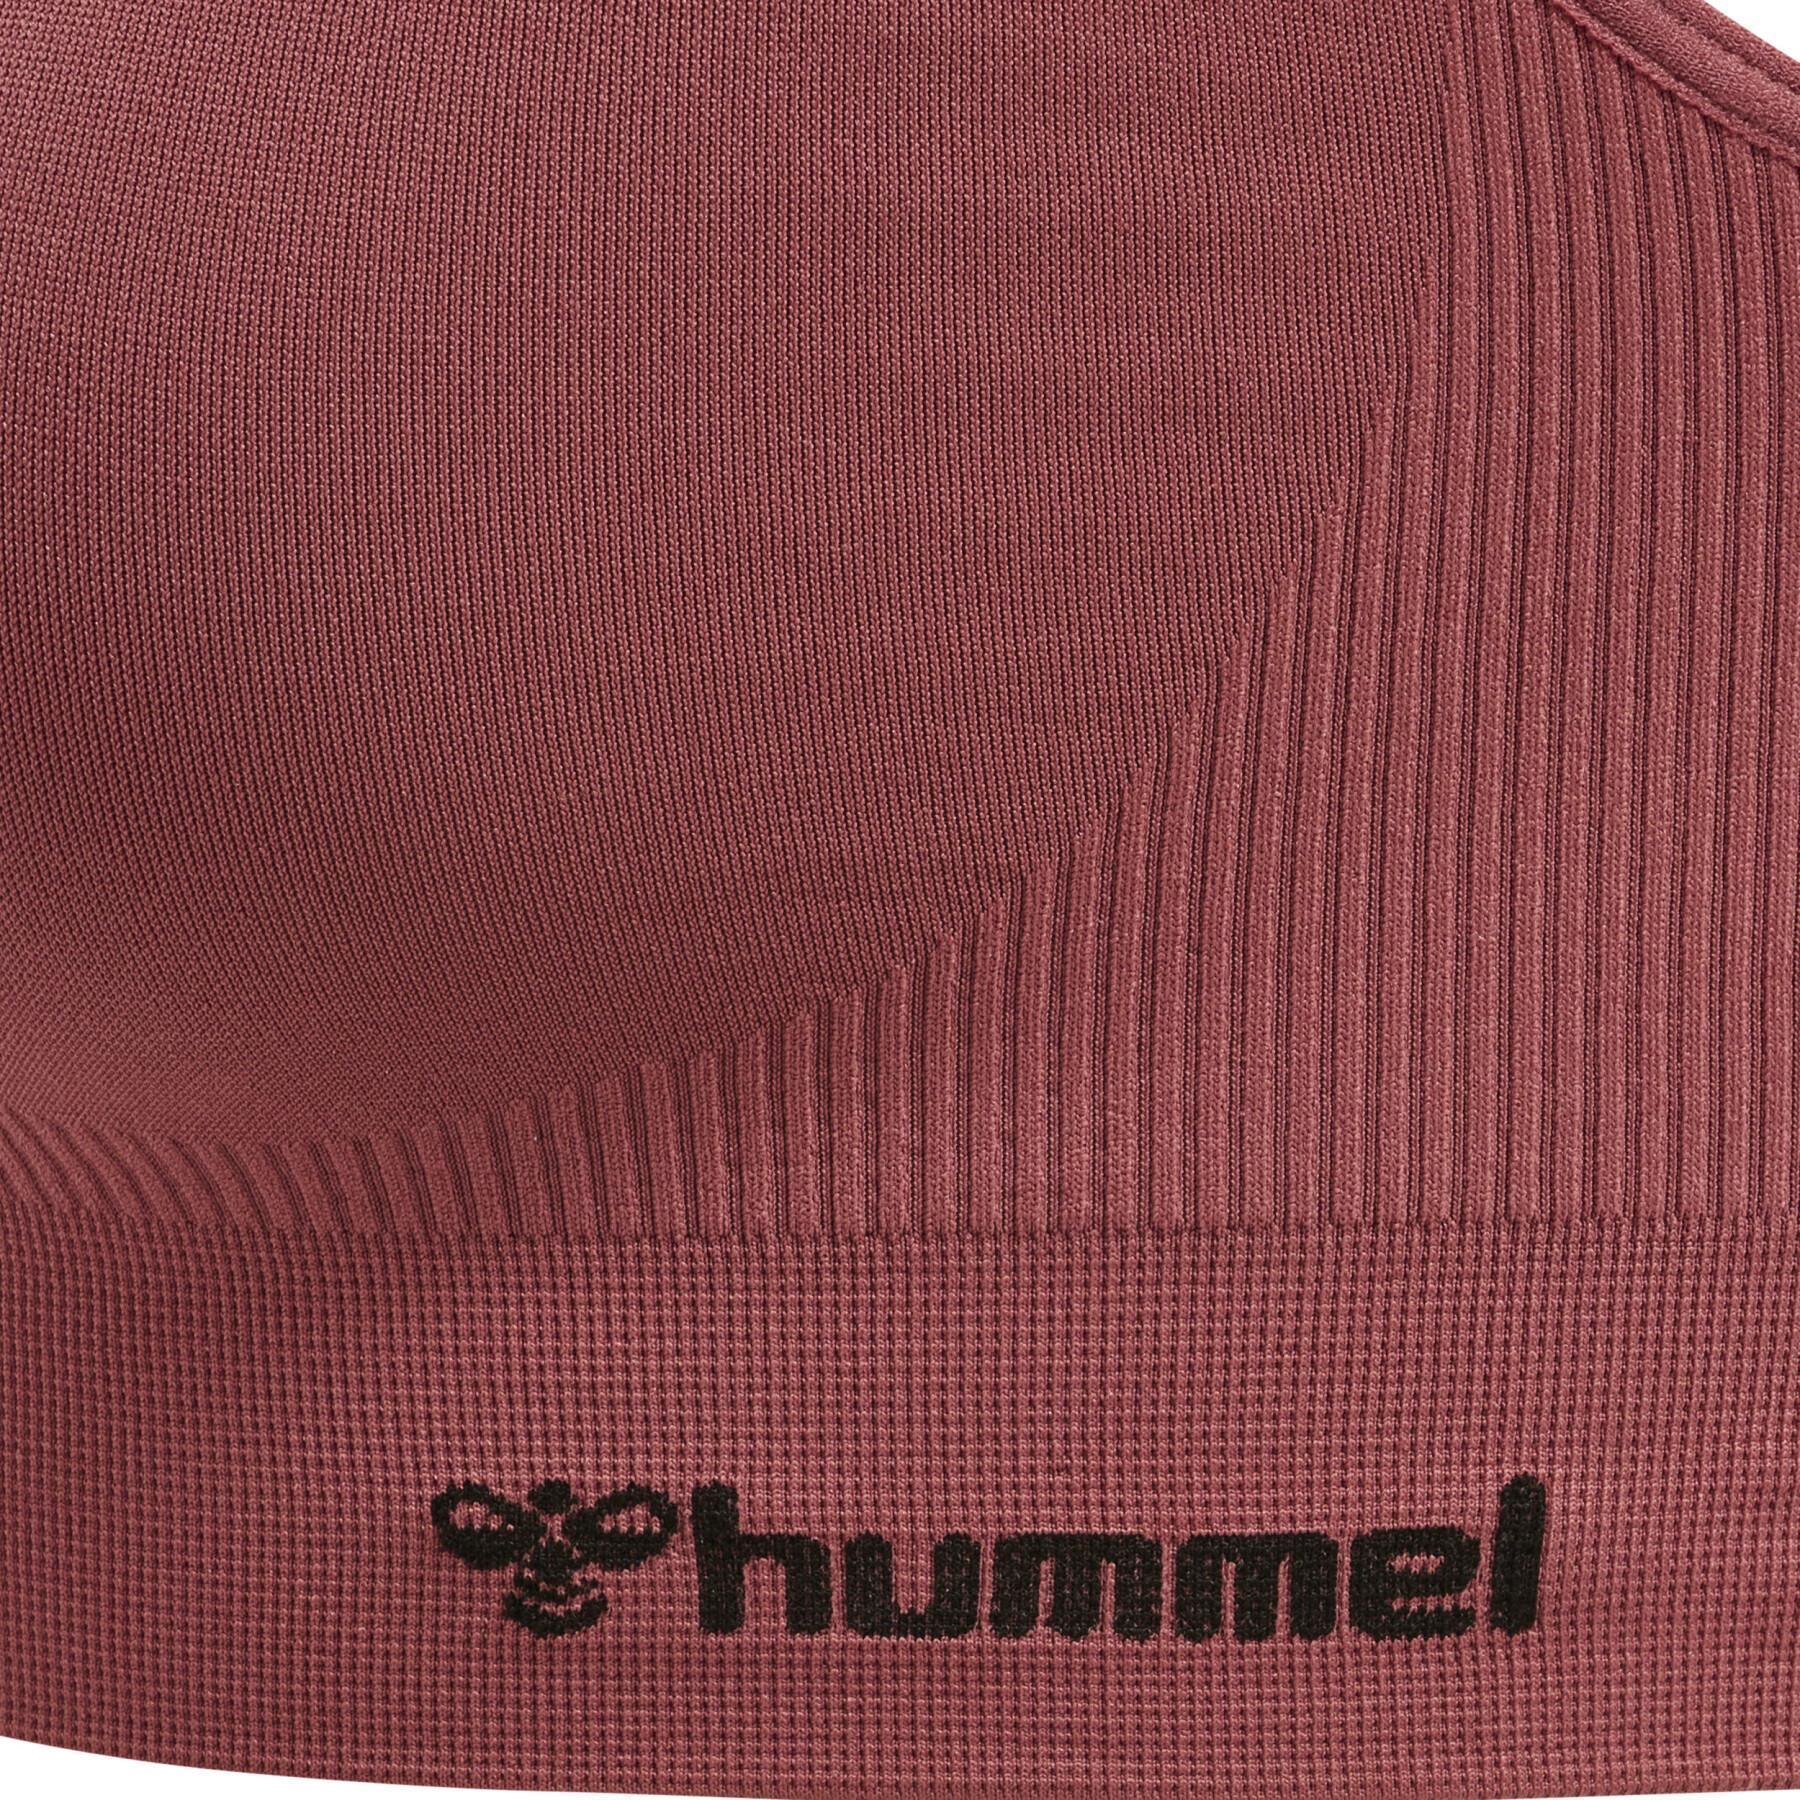 Seamless sports bra for women Hummel Tif - Hummel - Brands - Lifestyle